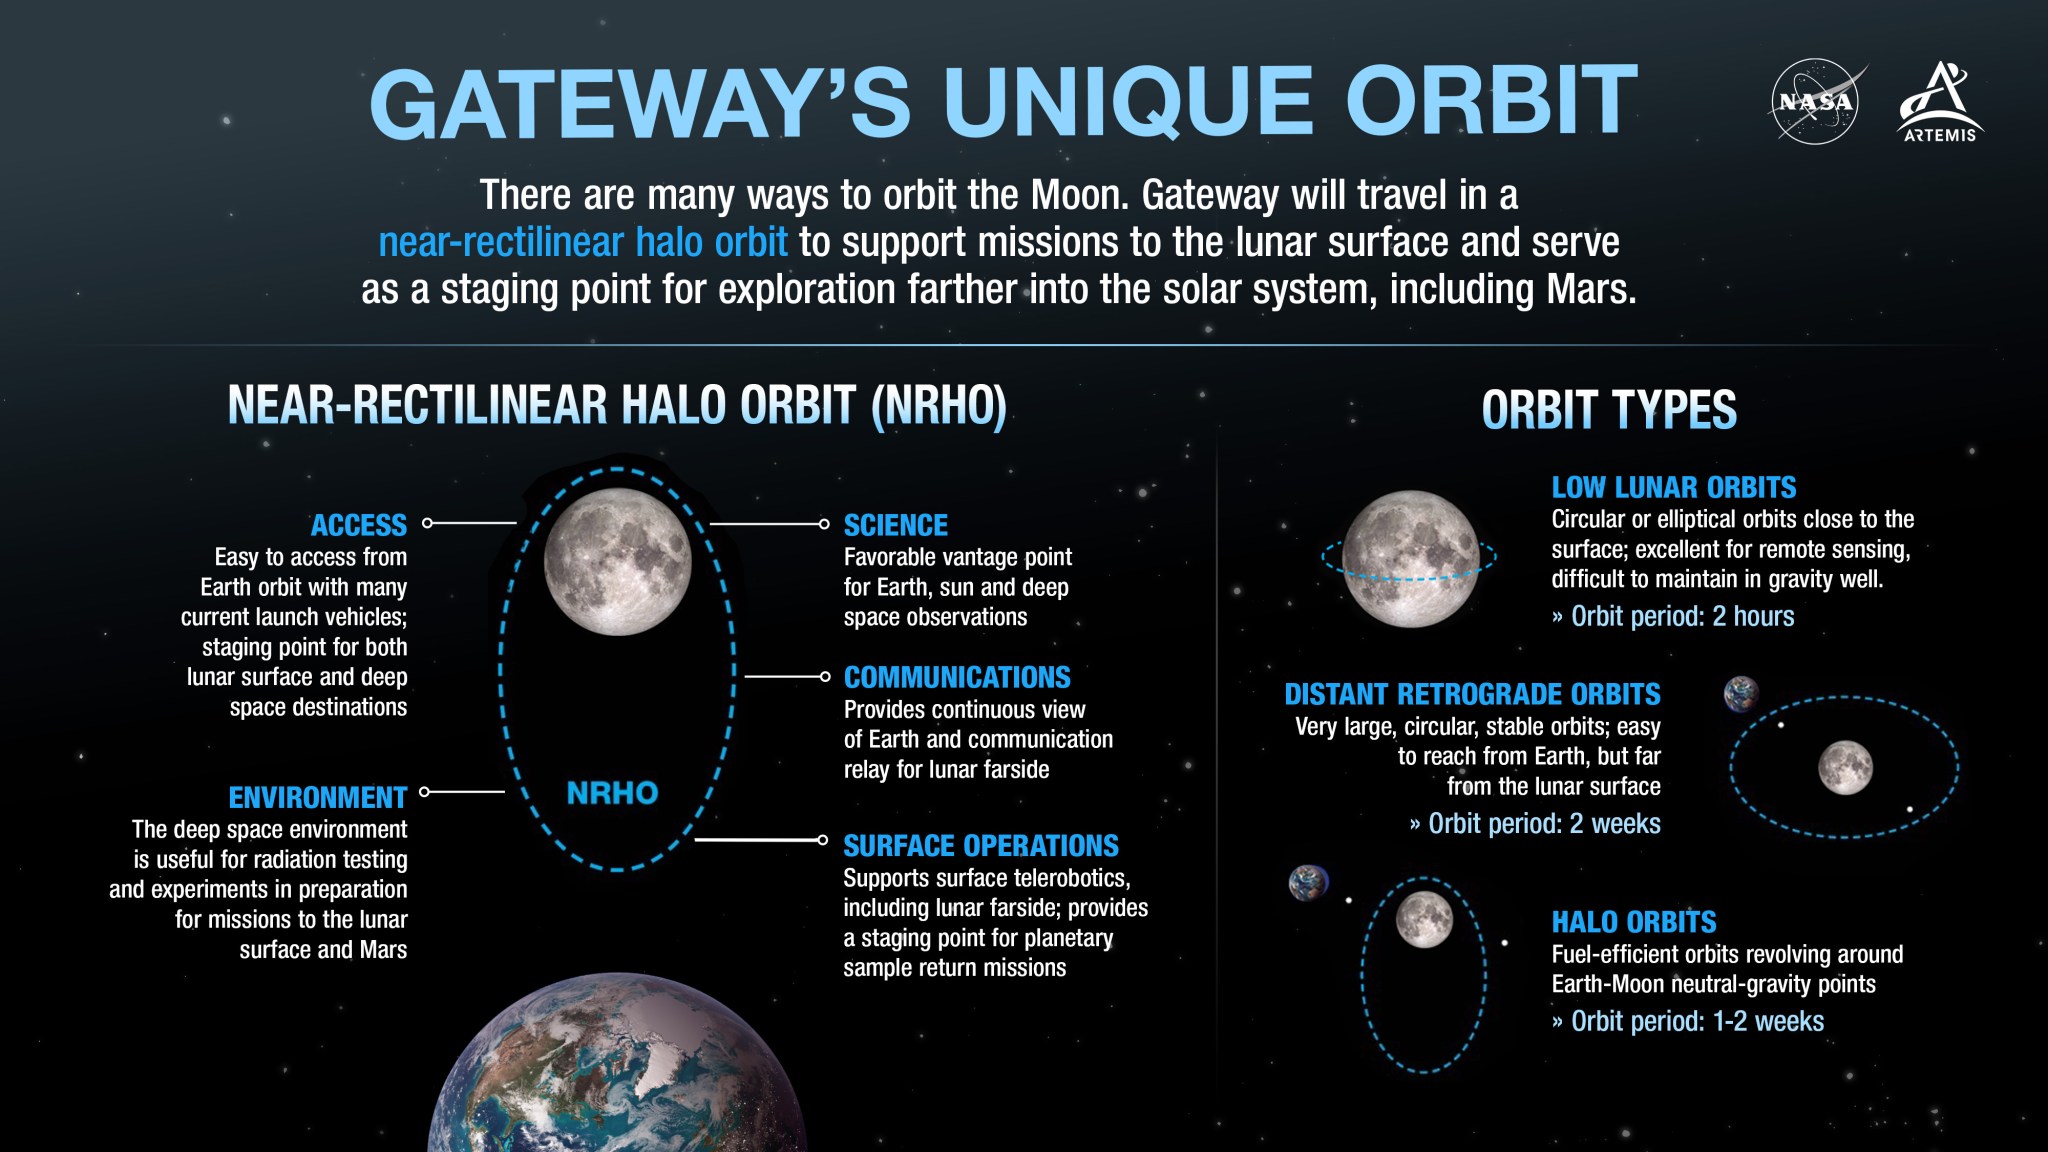 Infographic depicting NRHO, Gateway's unique near-rectilinear halo orbit 